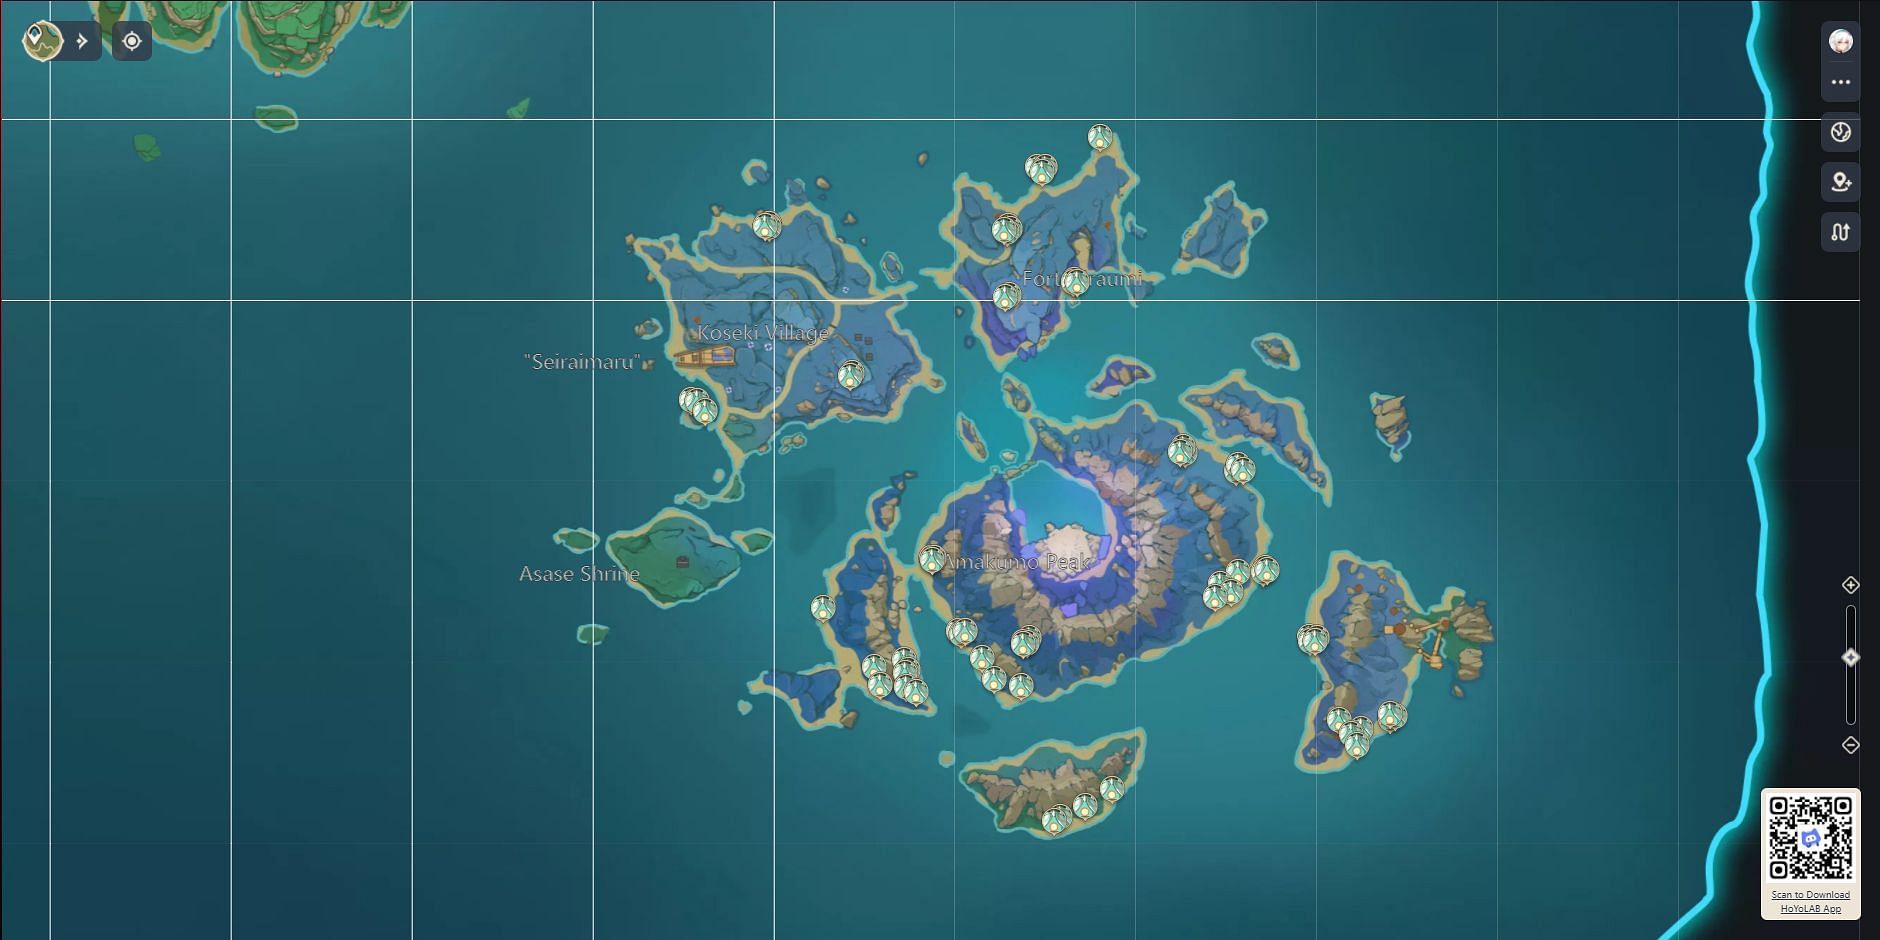 Seirai Island Specter location (Image via Teyvat Interactive Map)